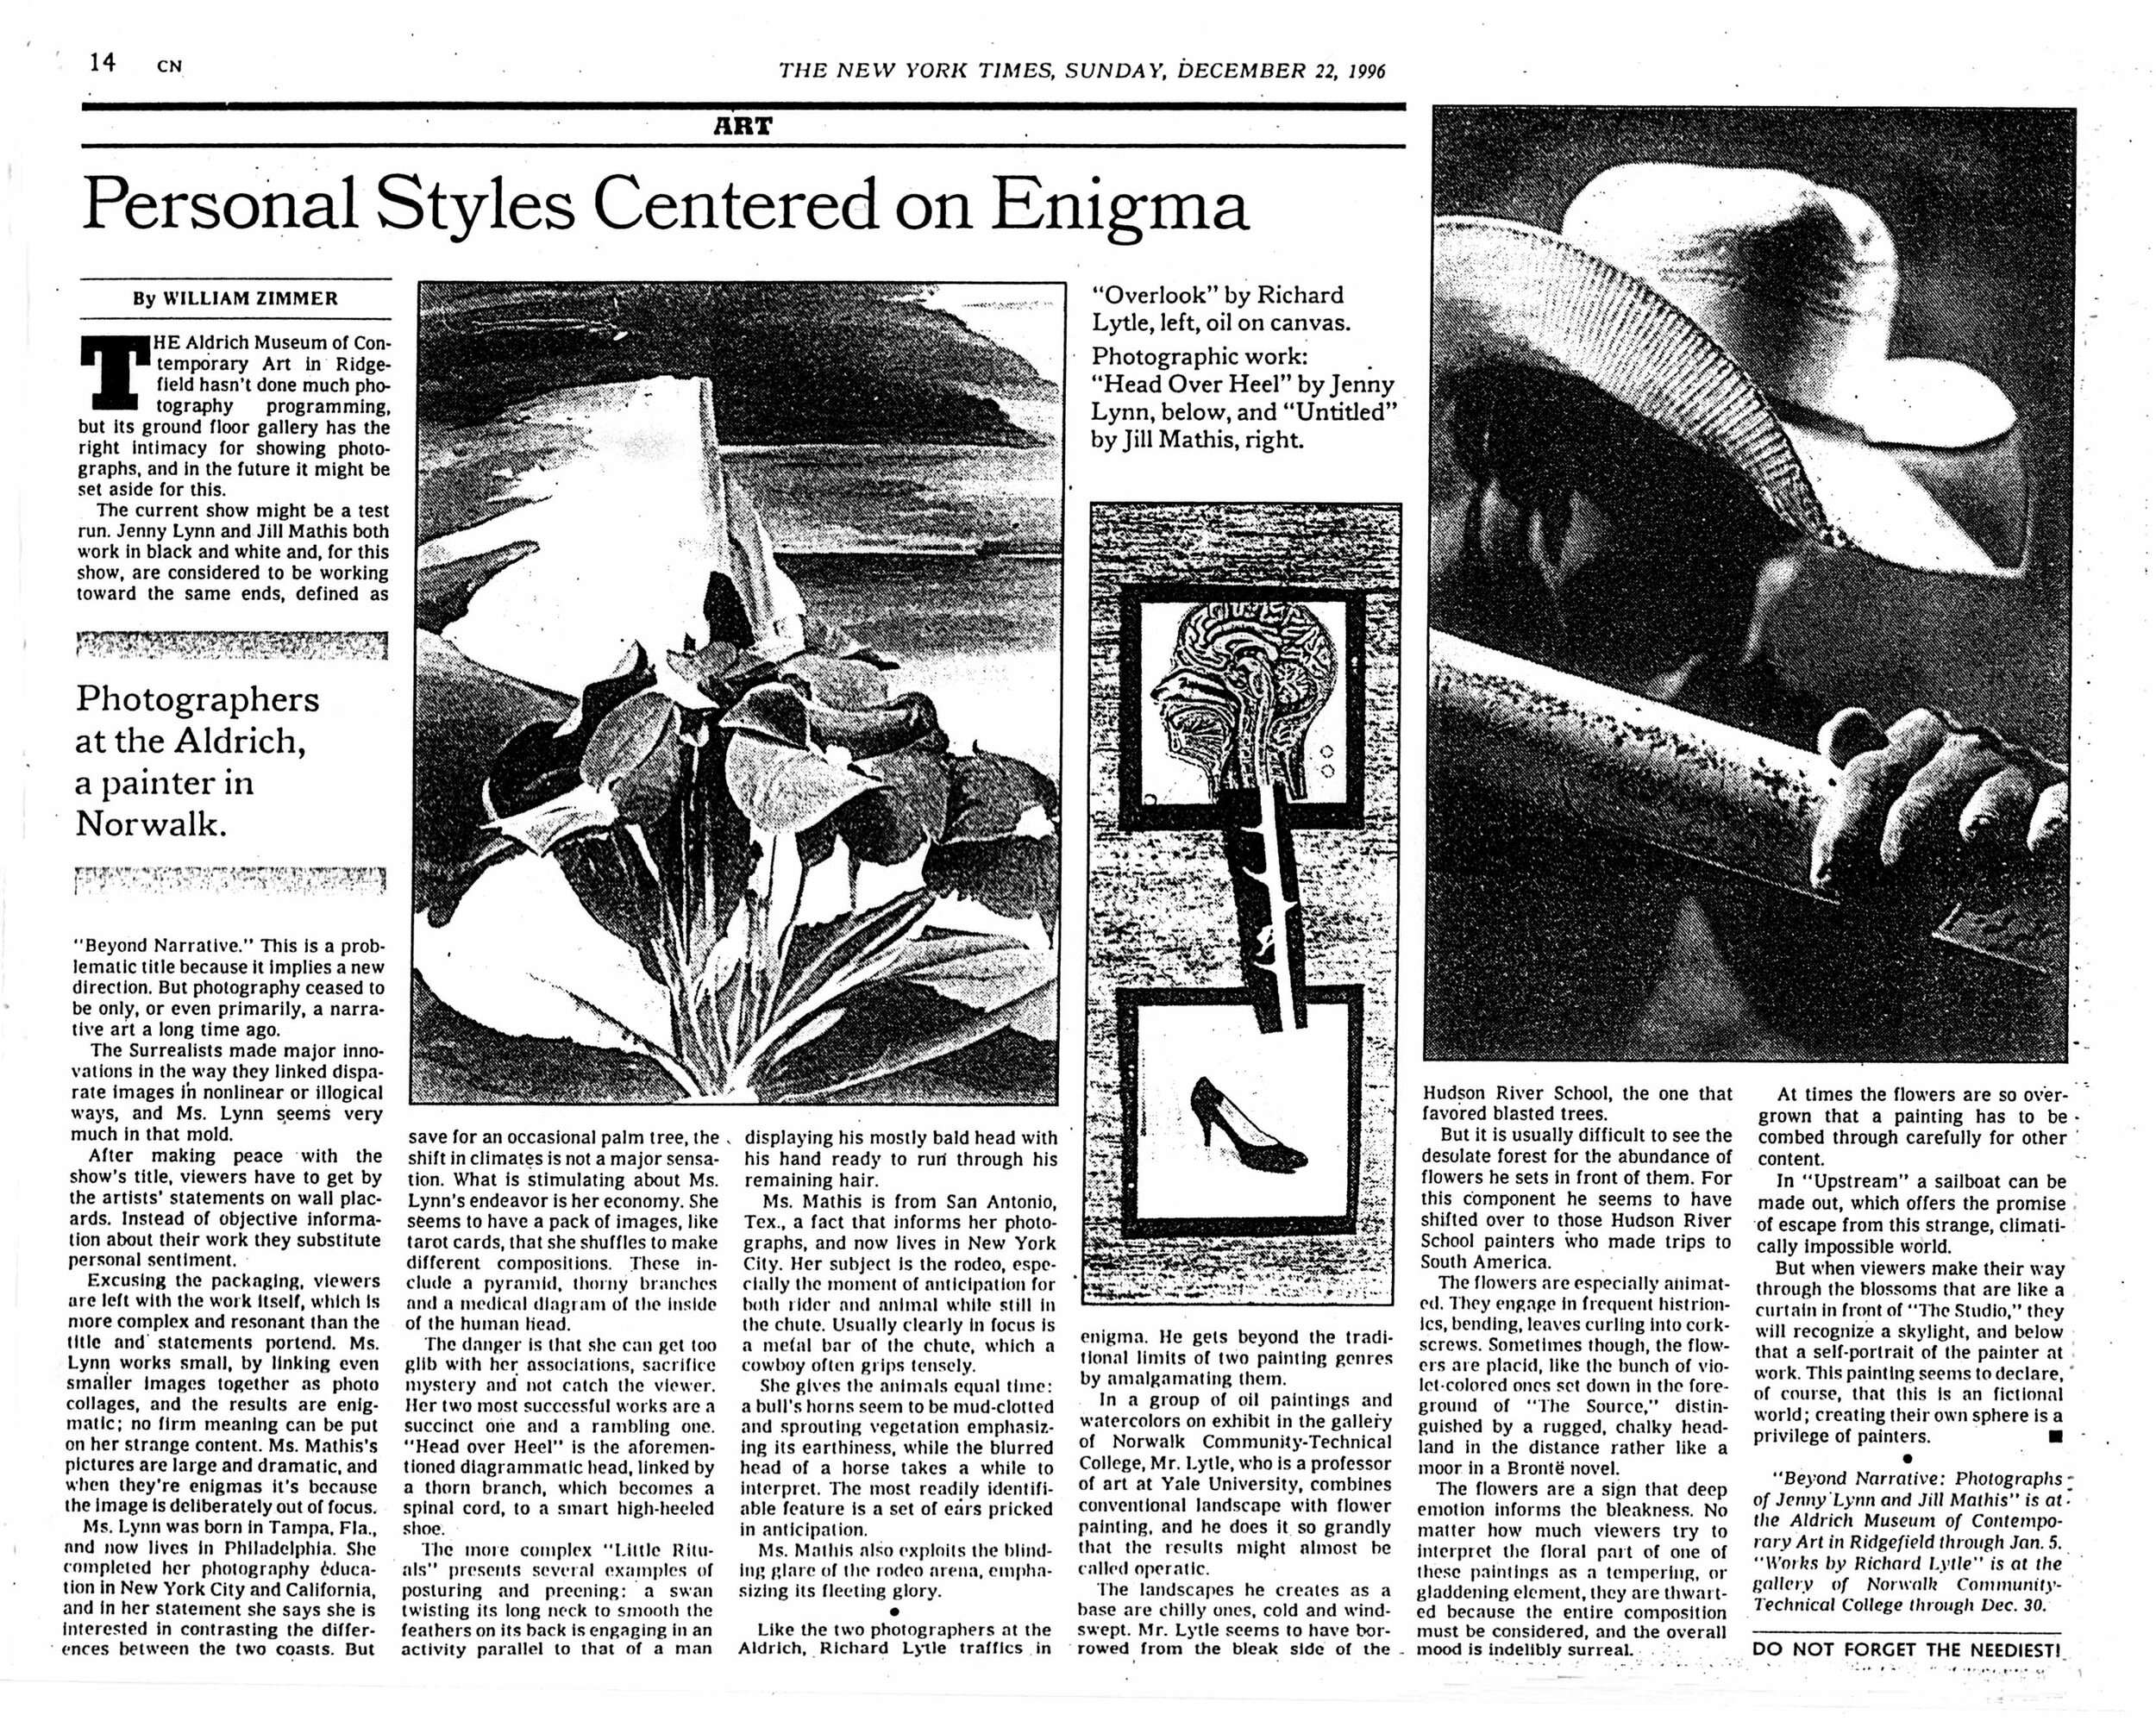 New York Times, 1996